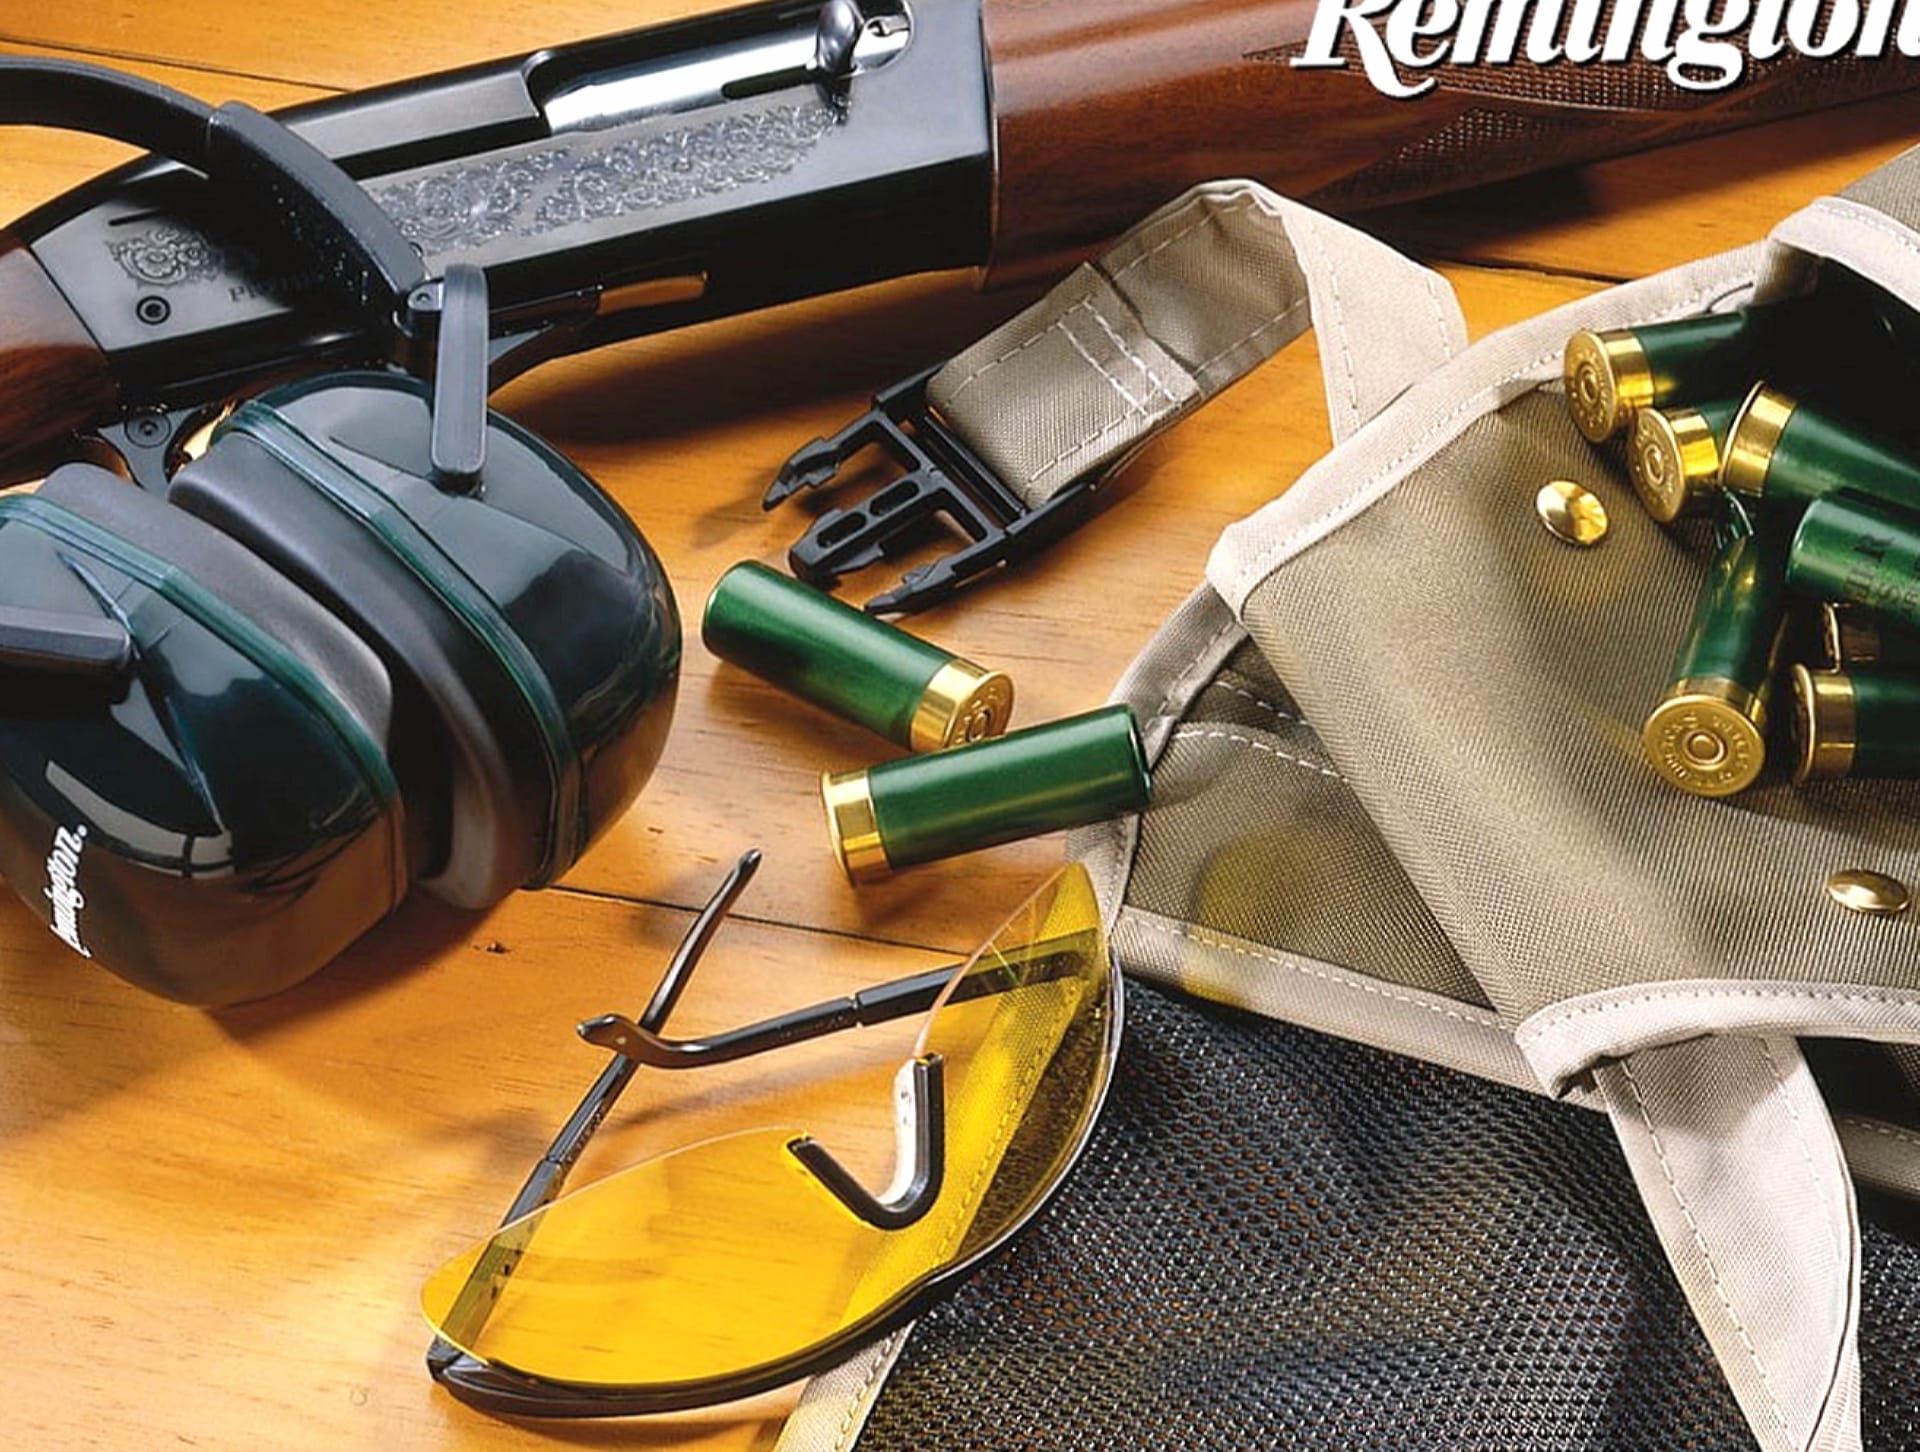 Remington Shotgun at 1152 x 864 size wallpapers HD quality